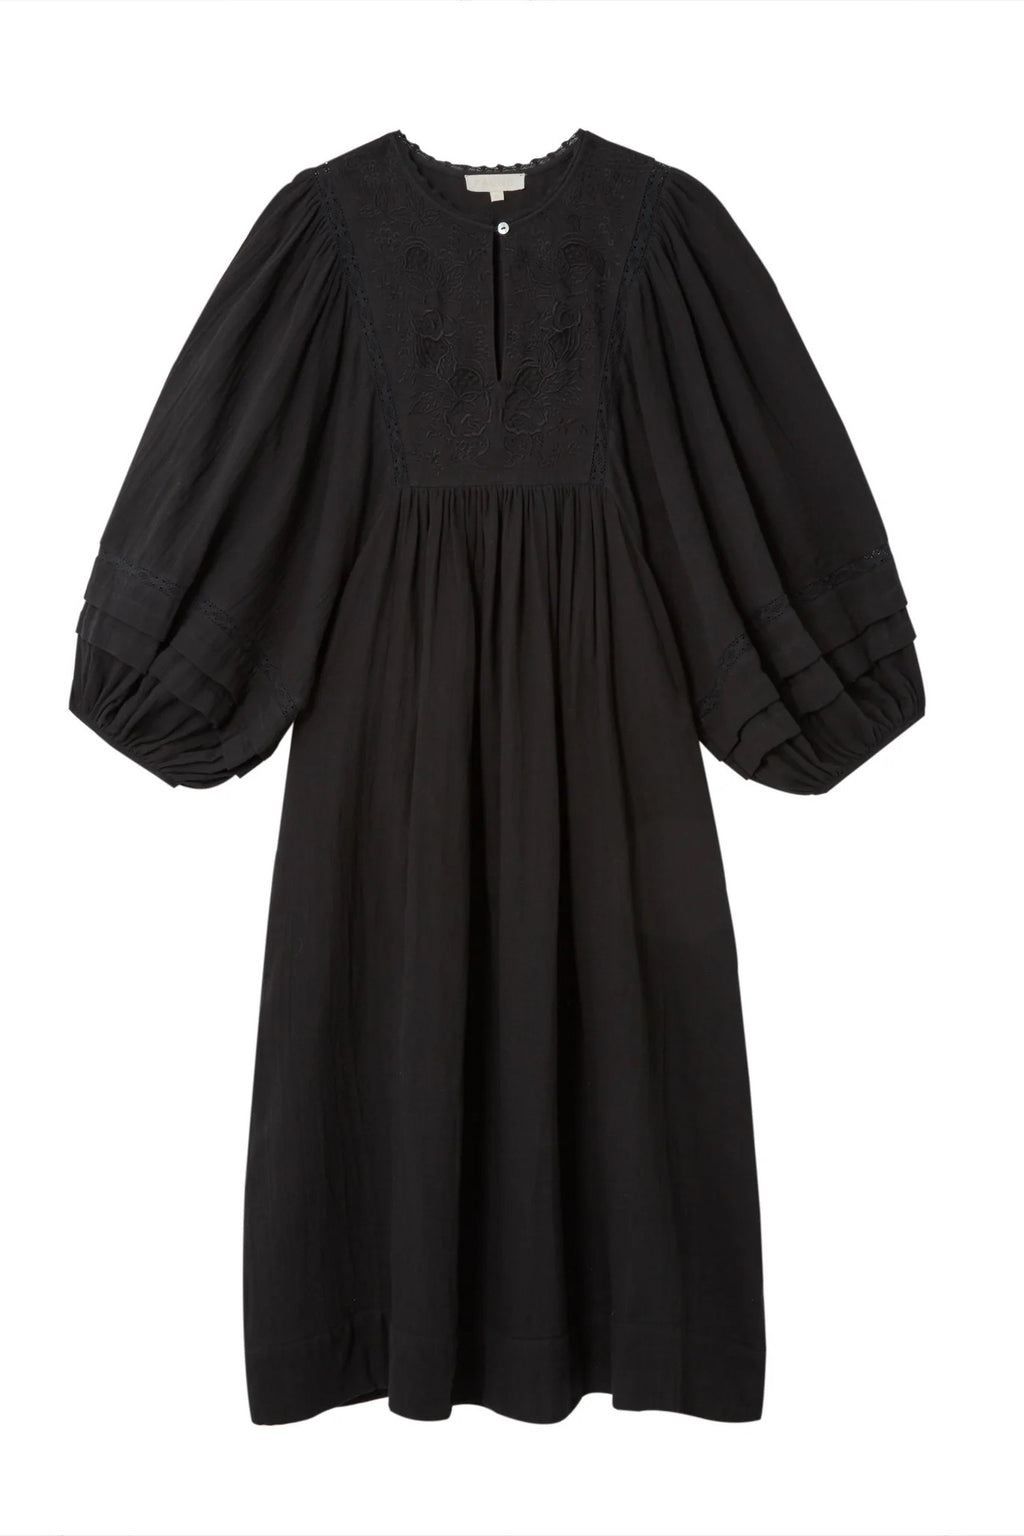 SS24 Faune Josephine Black Dress - The Mercantile London